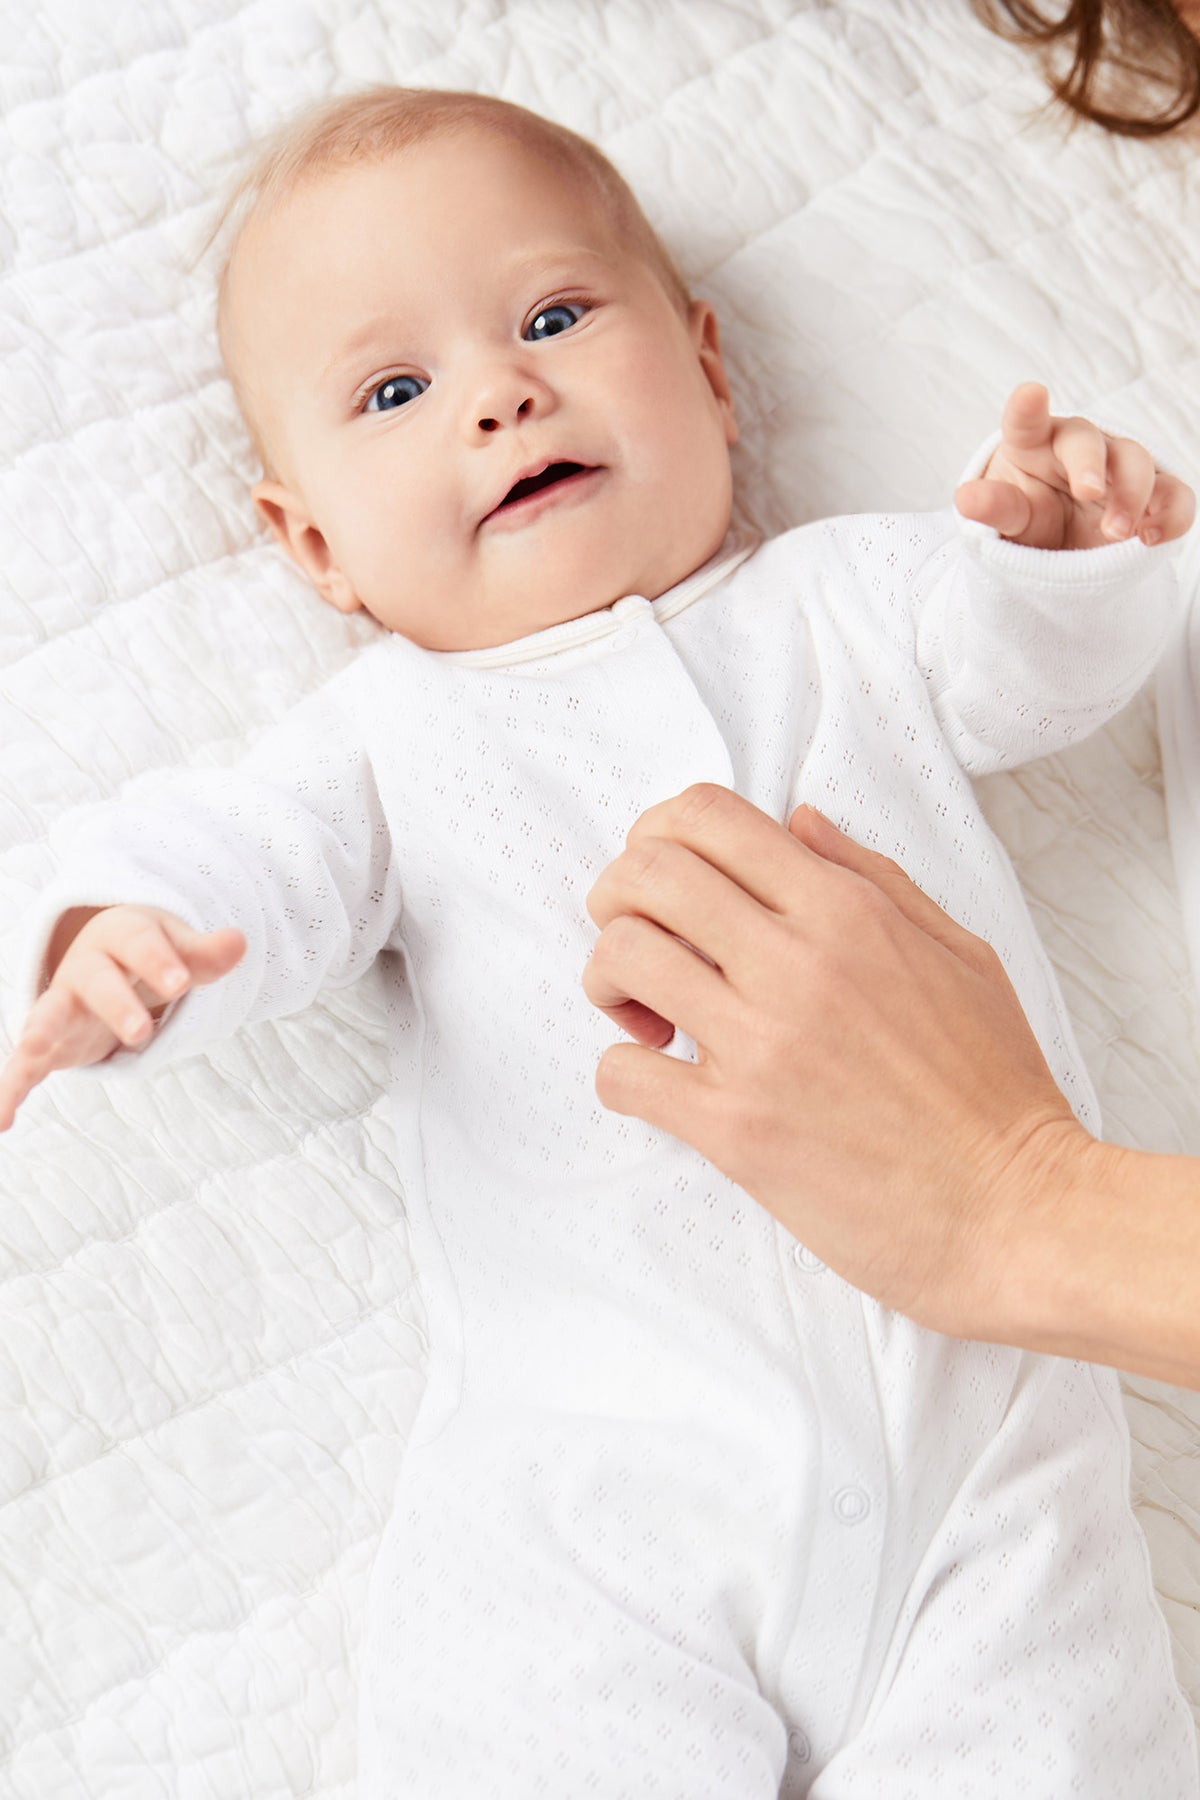 A baby wearing a white dress